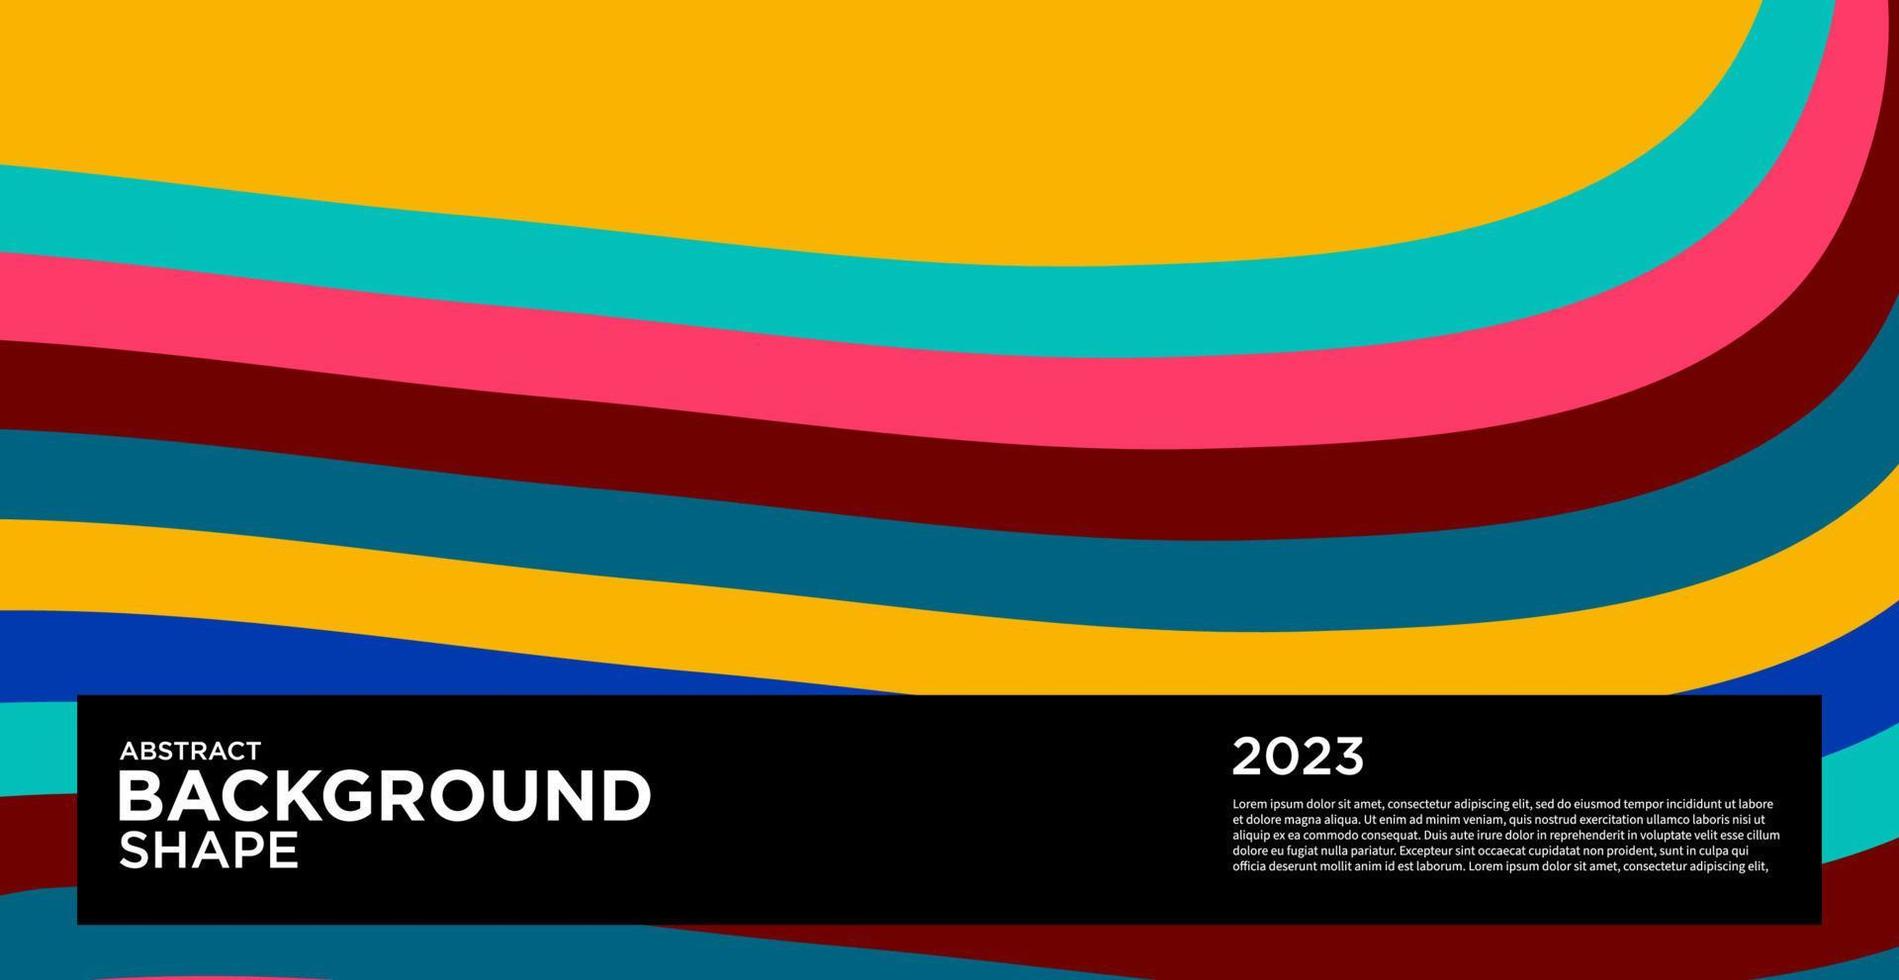 modelo de design do ano novo 2023 com abstrato colorido fluido, fundo colorido, pôster, panfleto, mídia social vetor